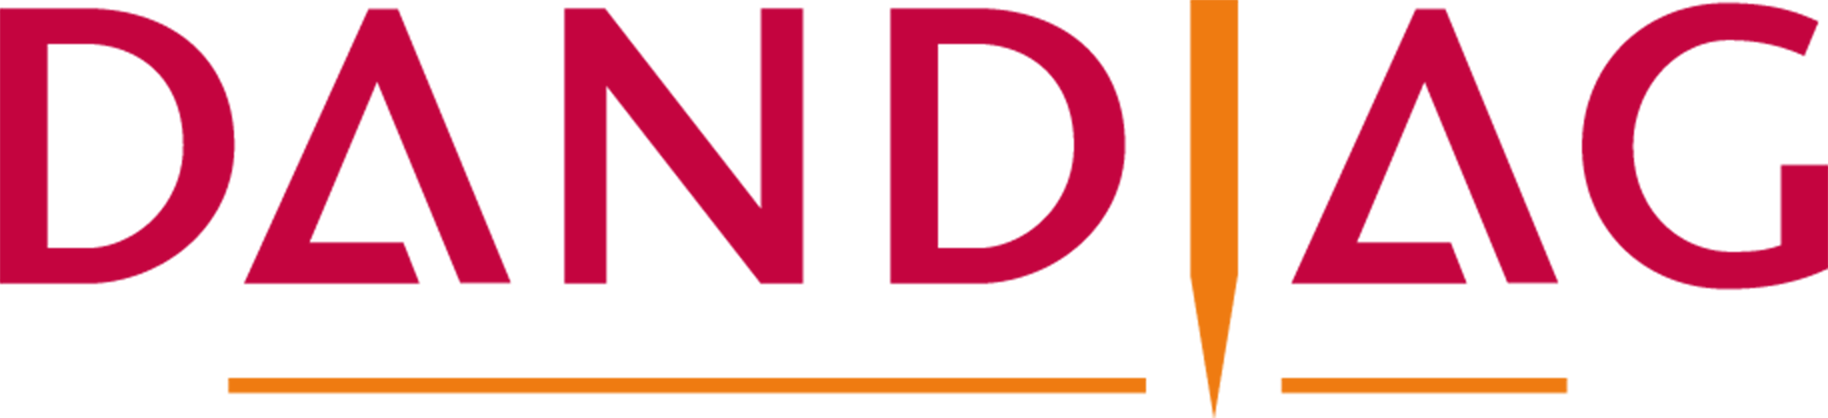 Dandiag logo